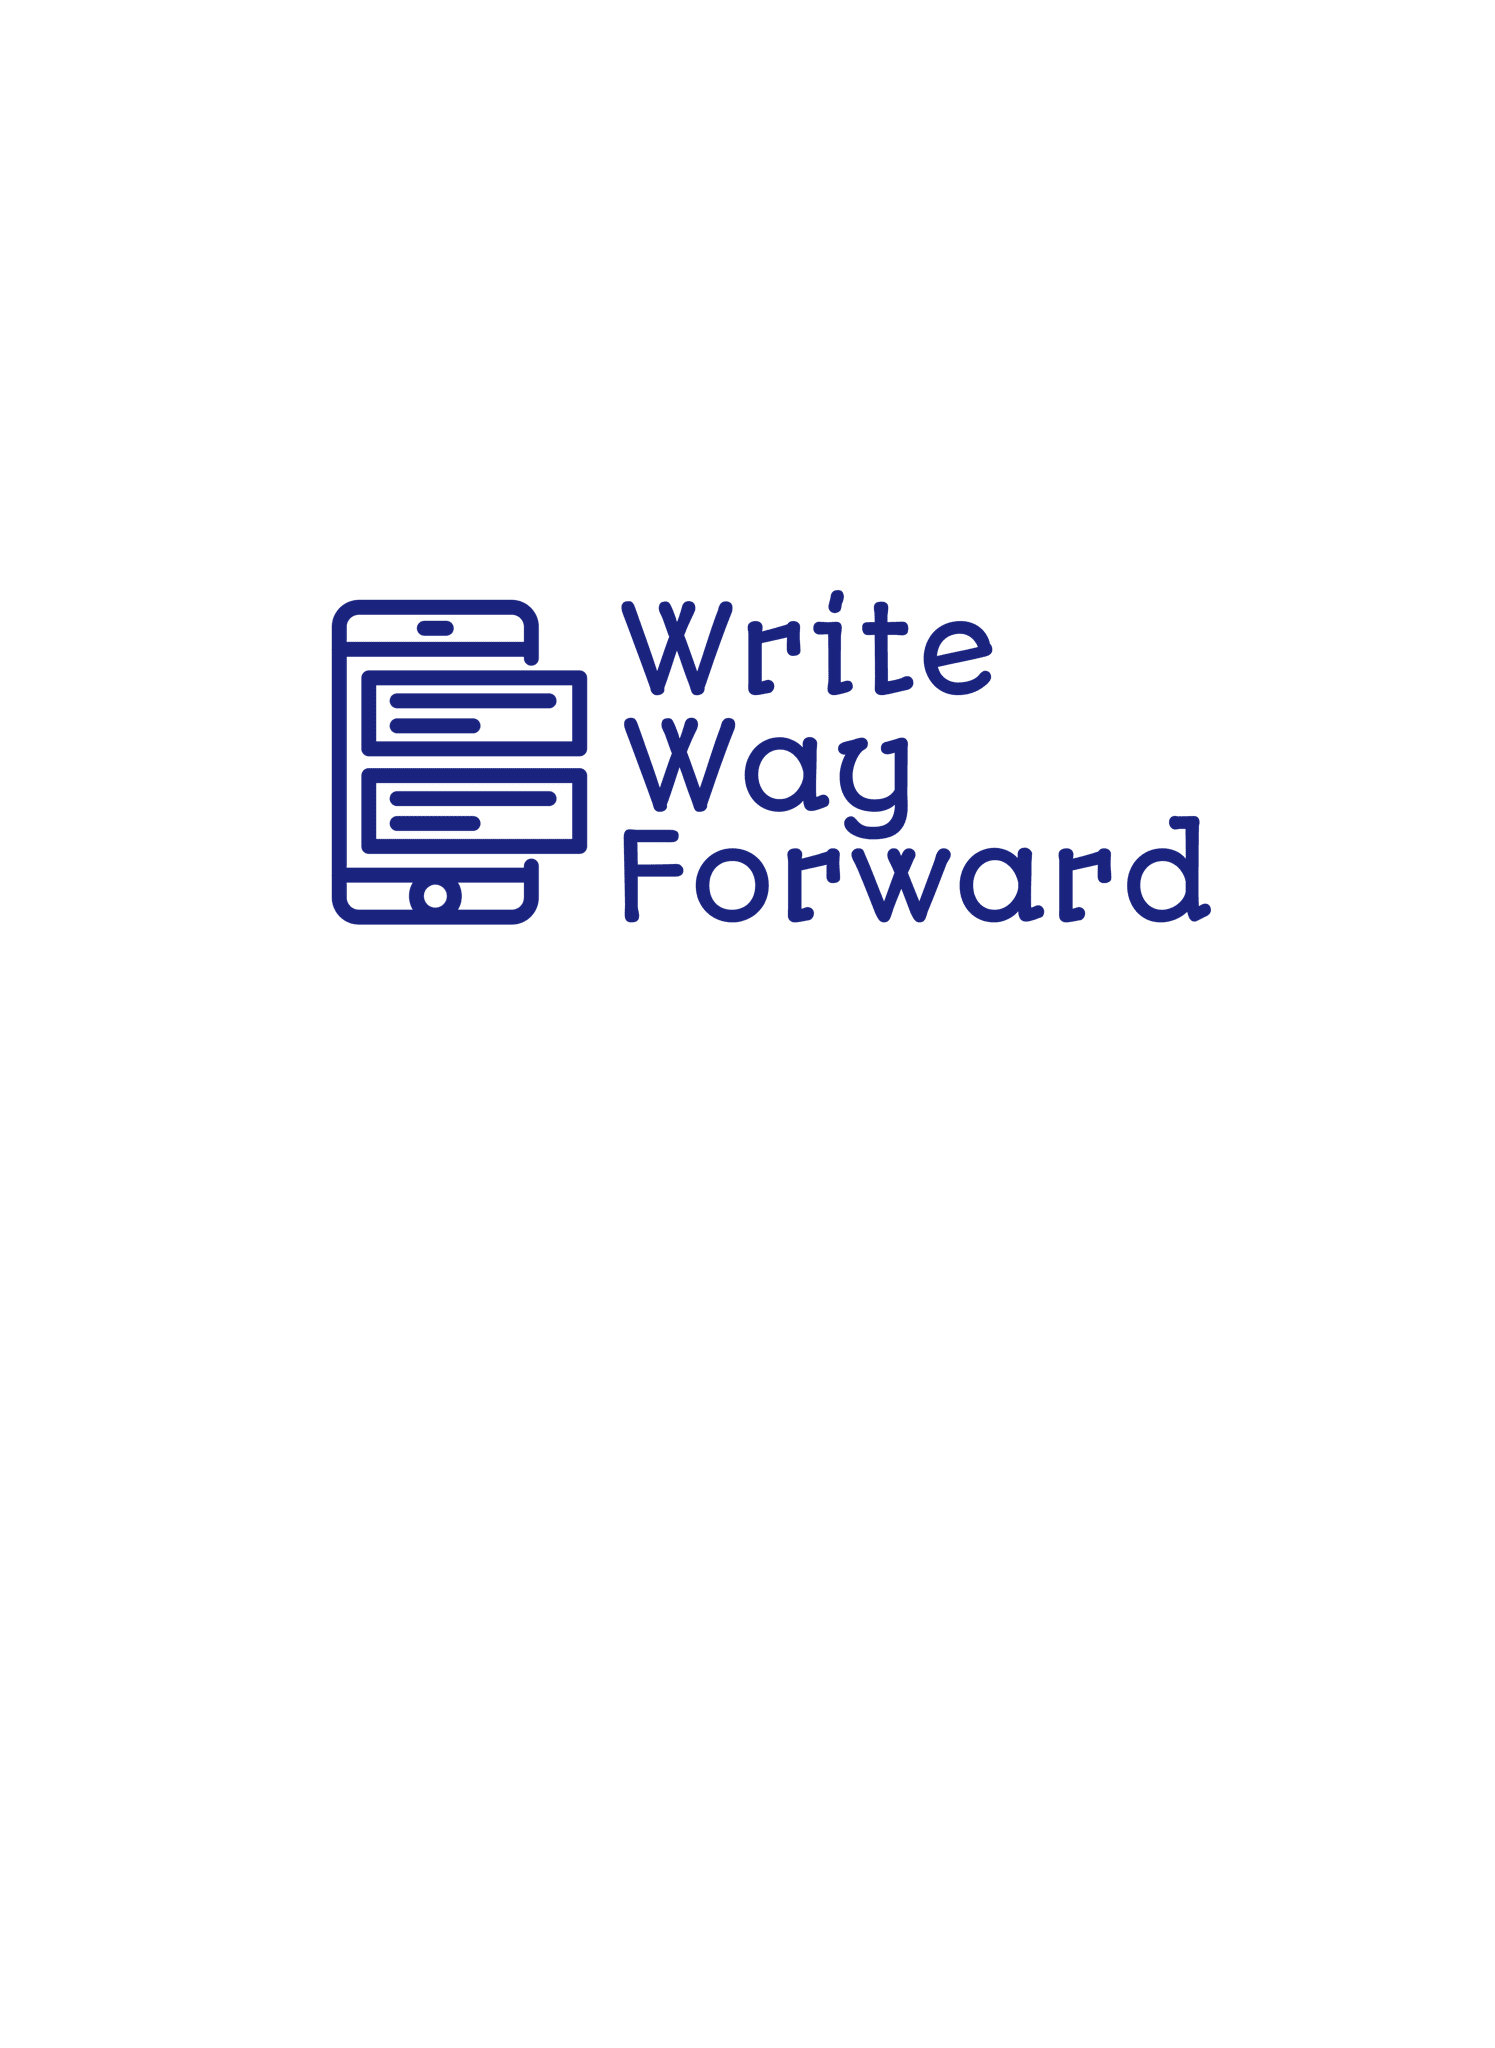 The Write Way Forward